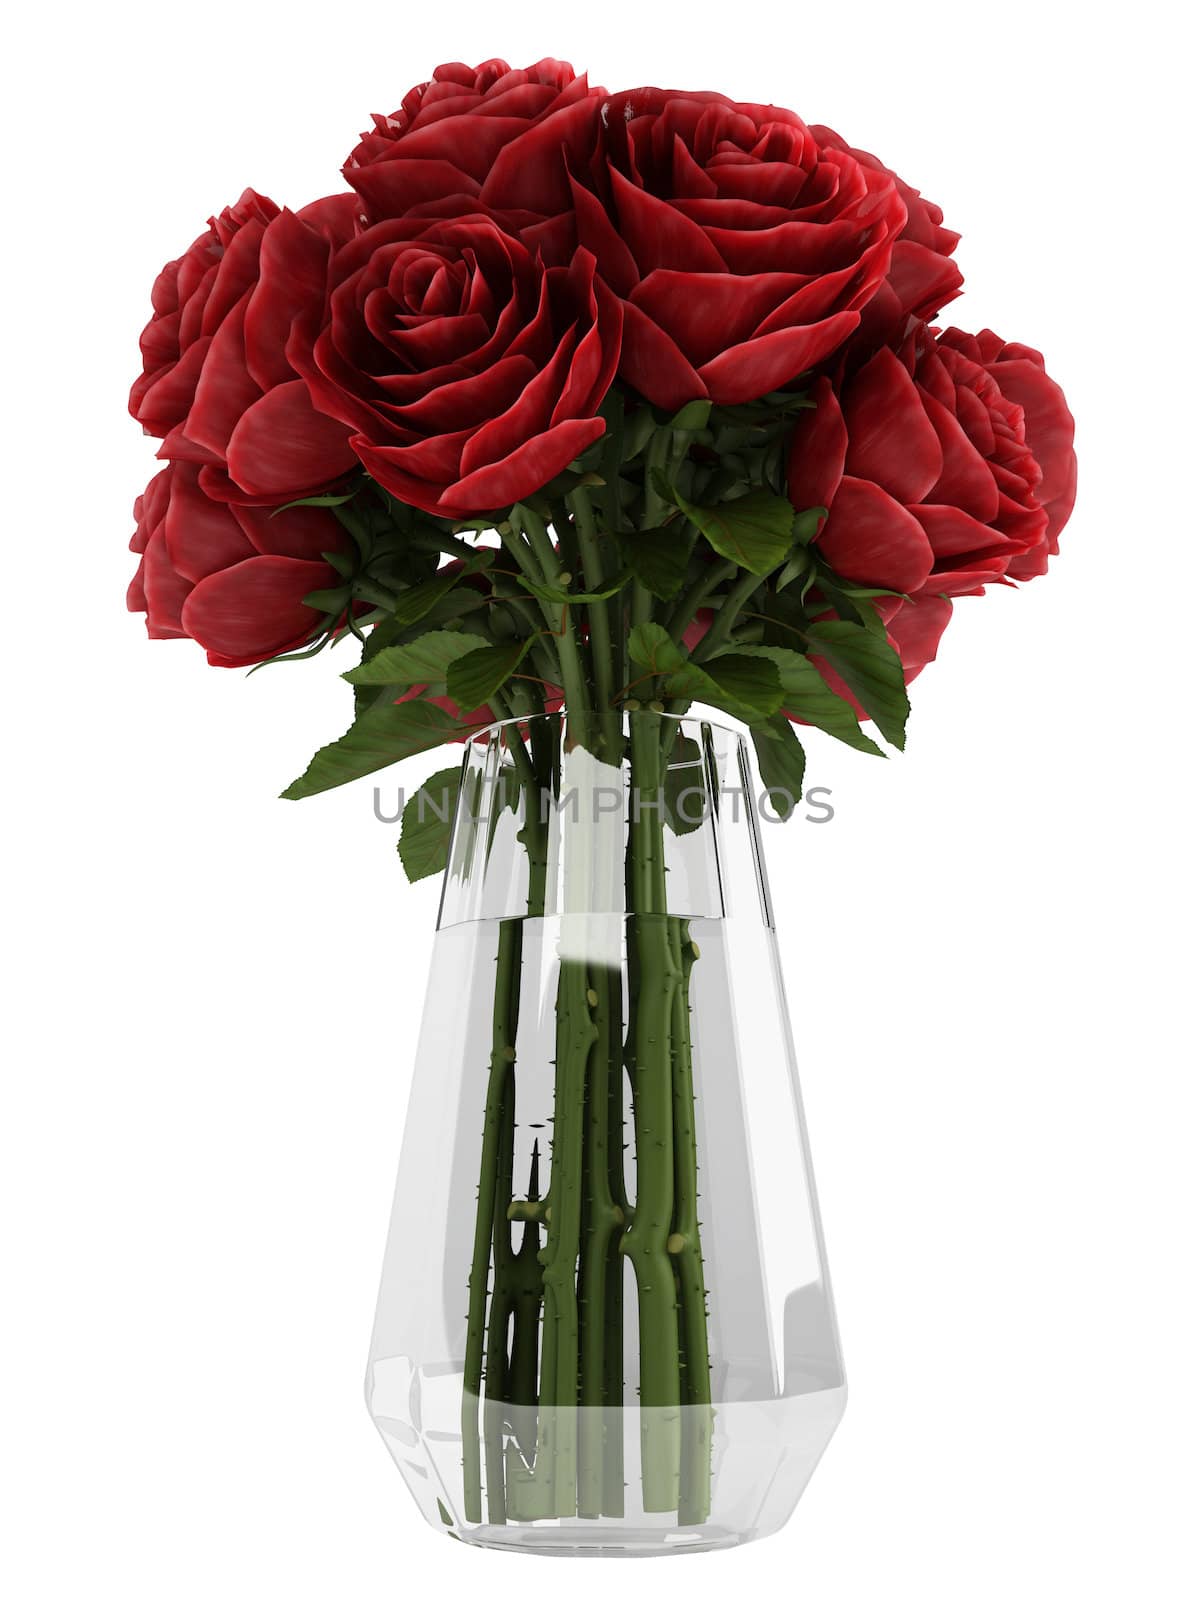 Vase of deep burgundy red roses by AlexanderMorozov